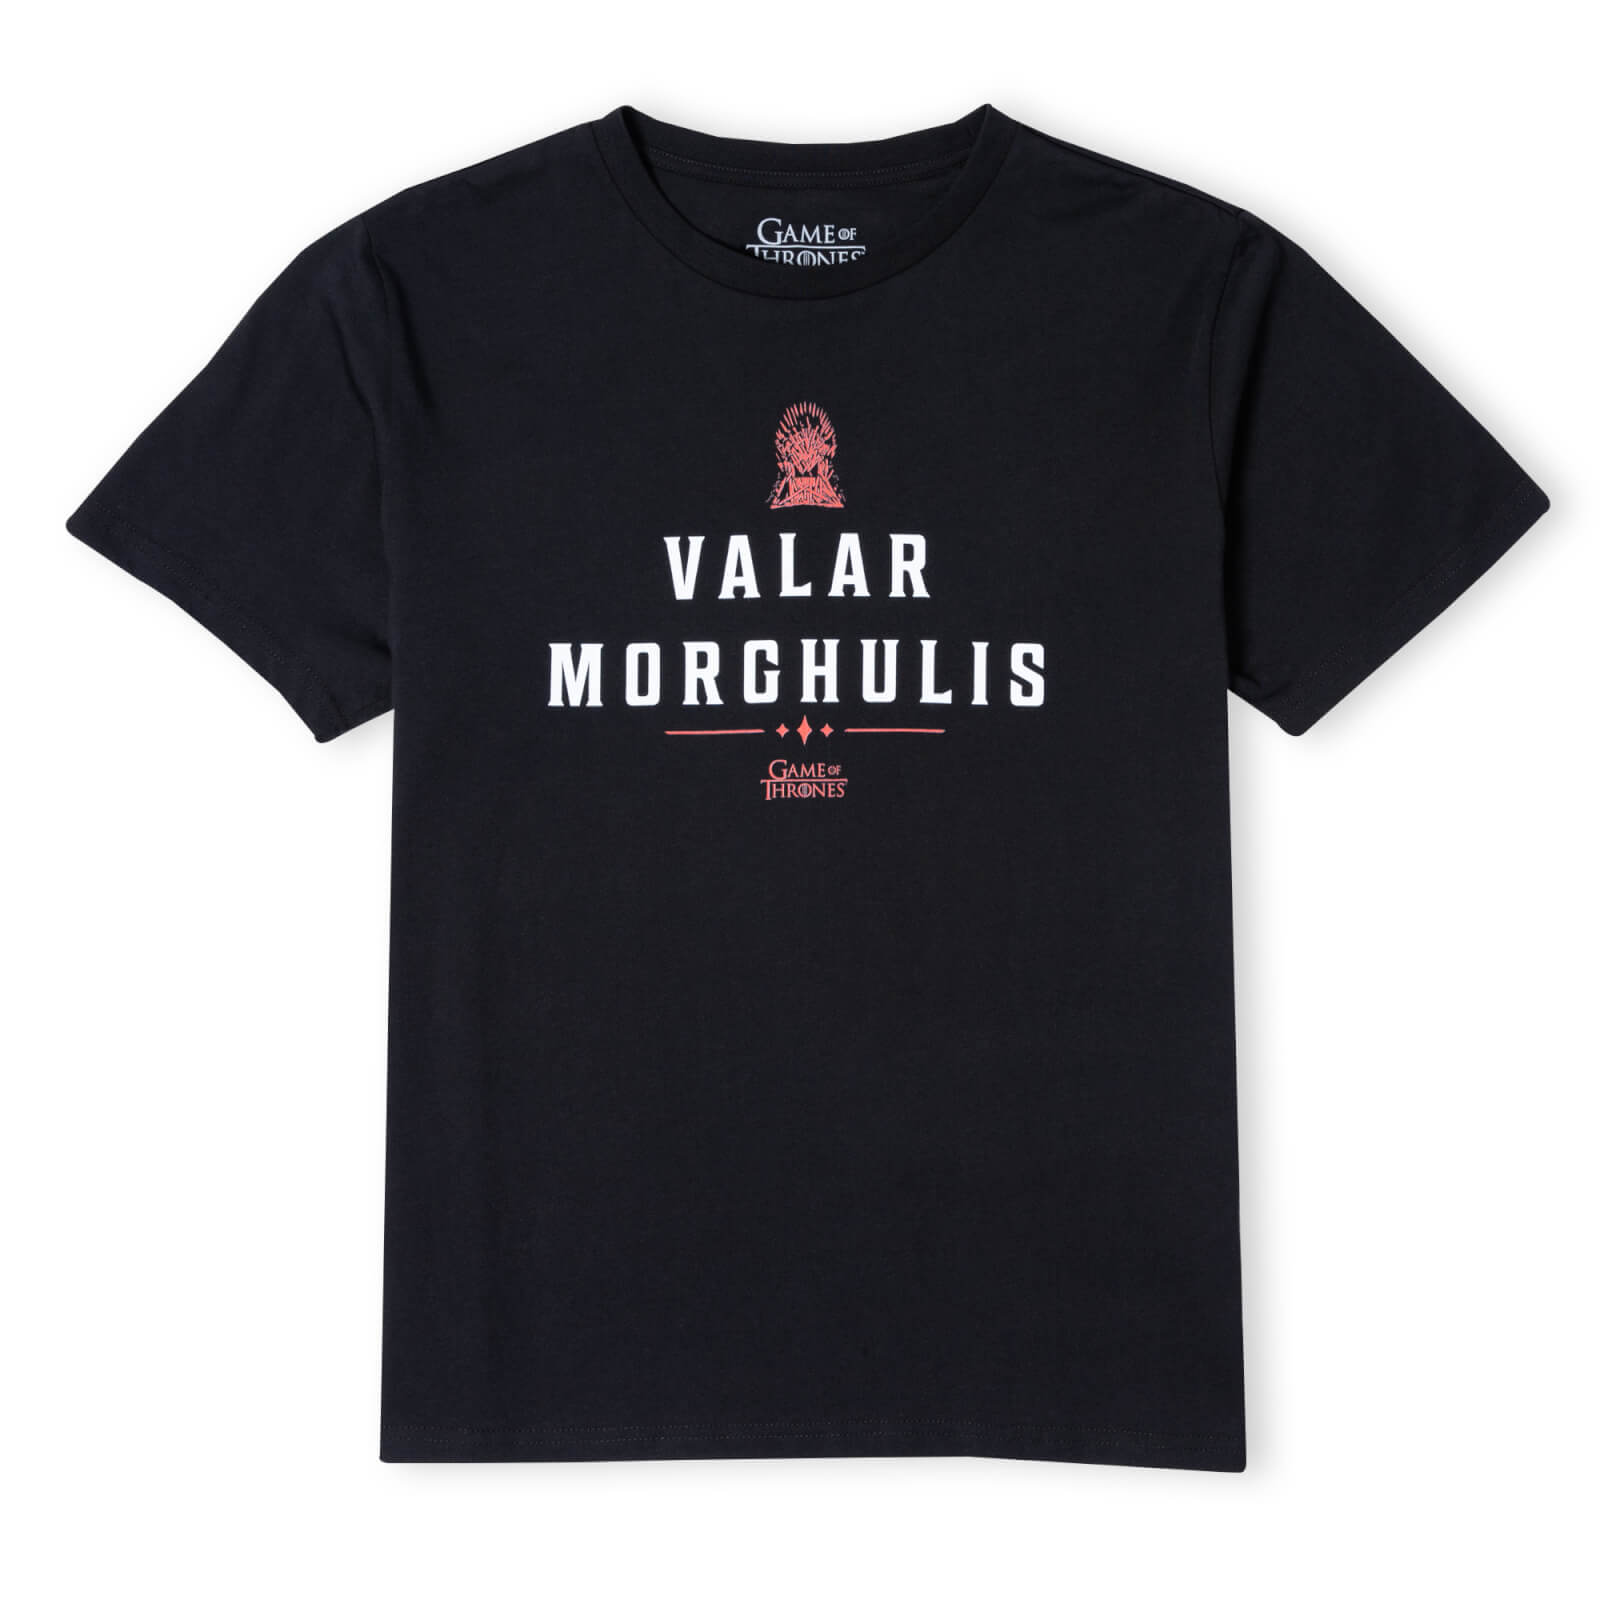 Game of Thrones Valar Morghulis Men's T-Shirt - Black - XXL - Black product